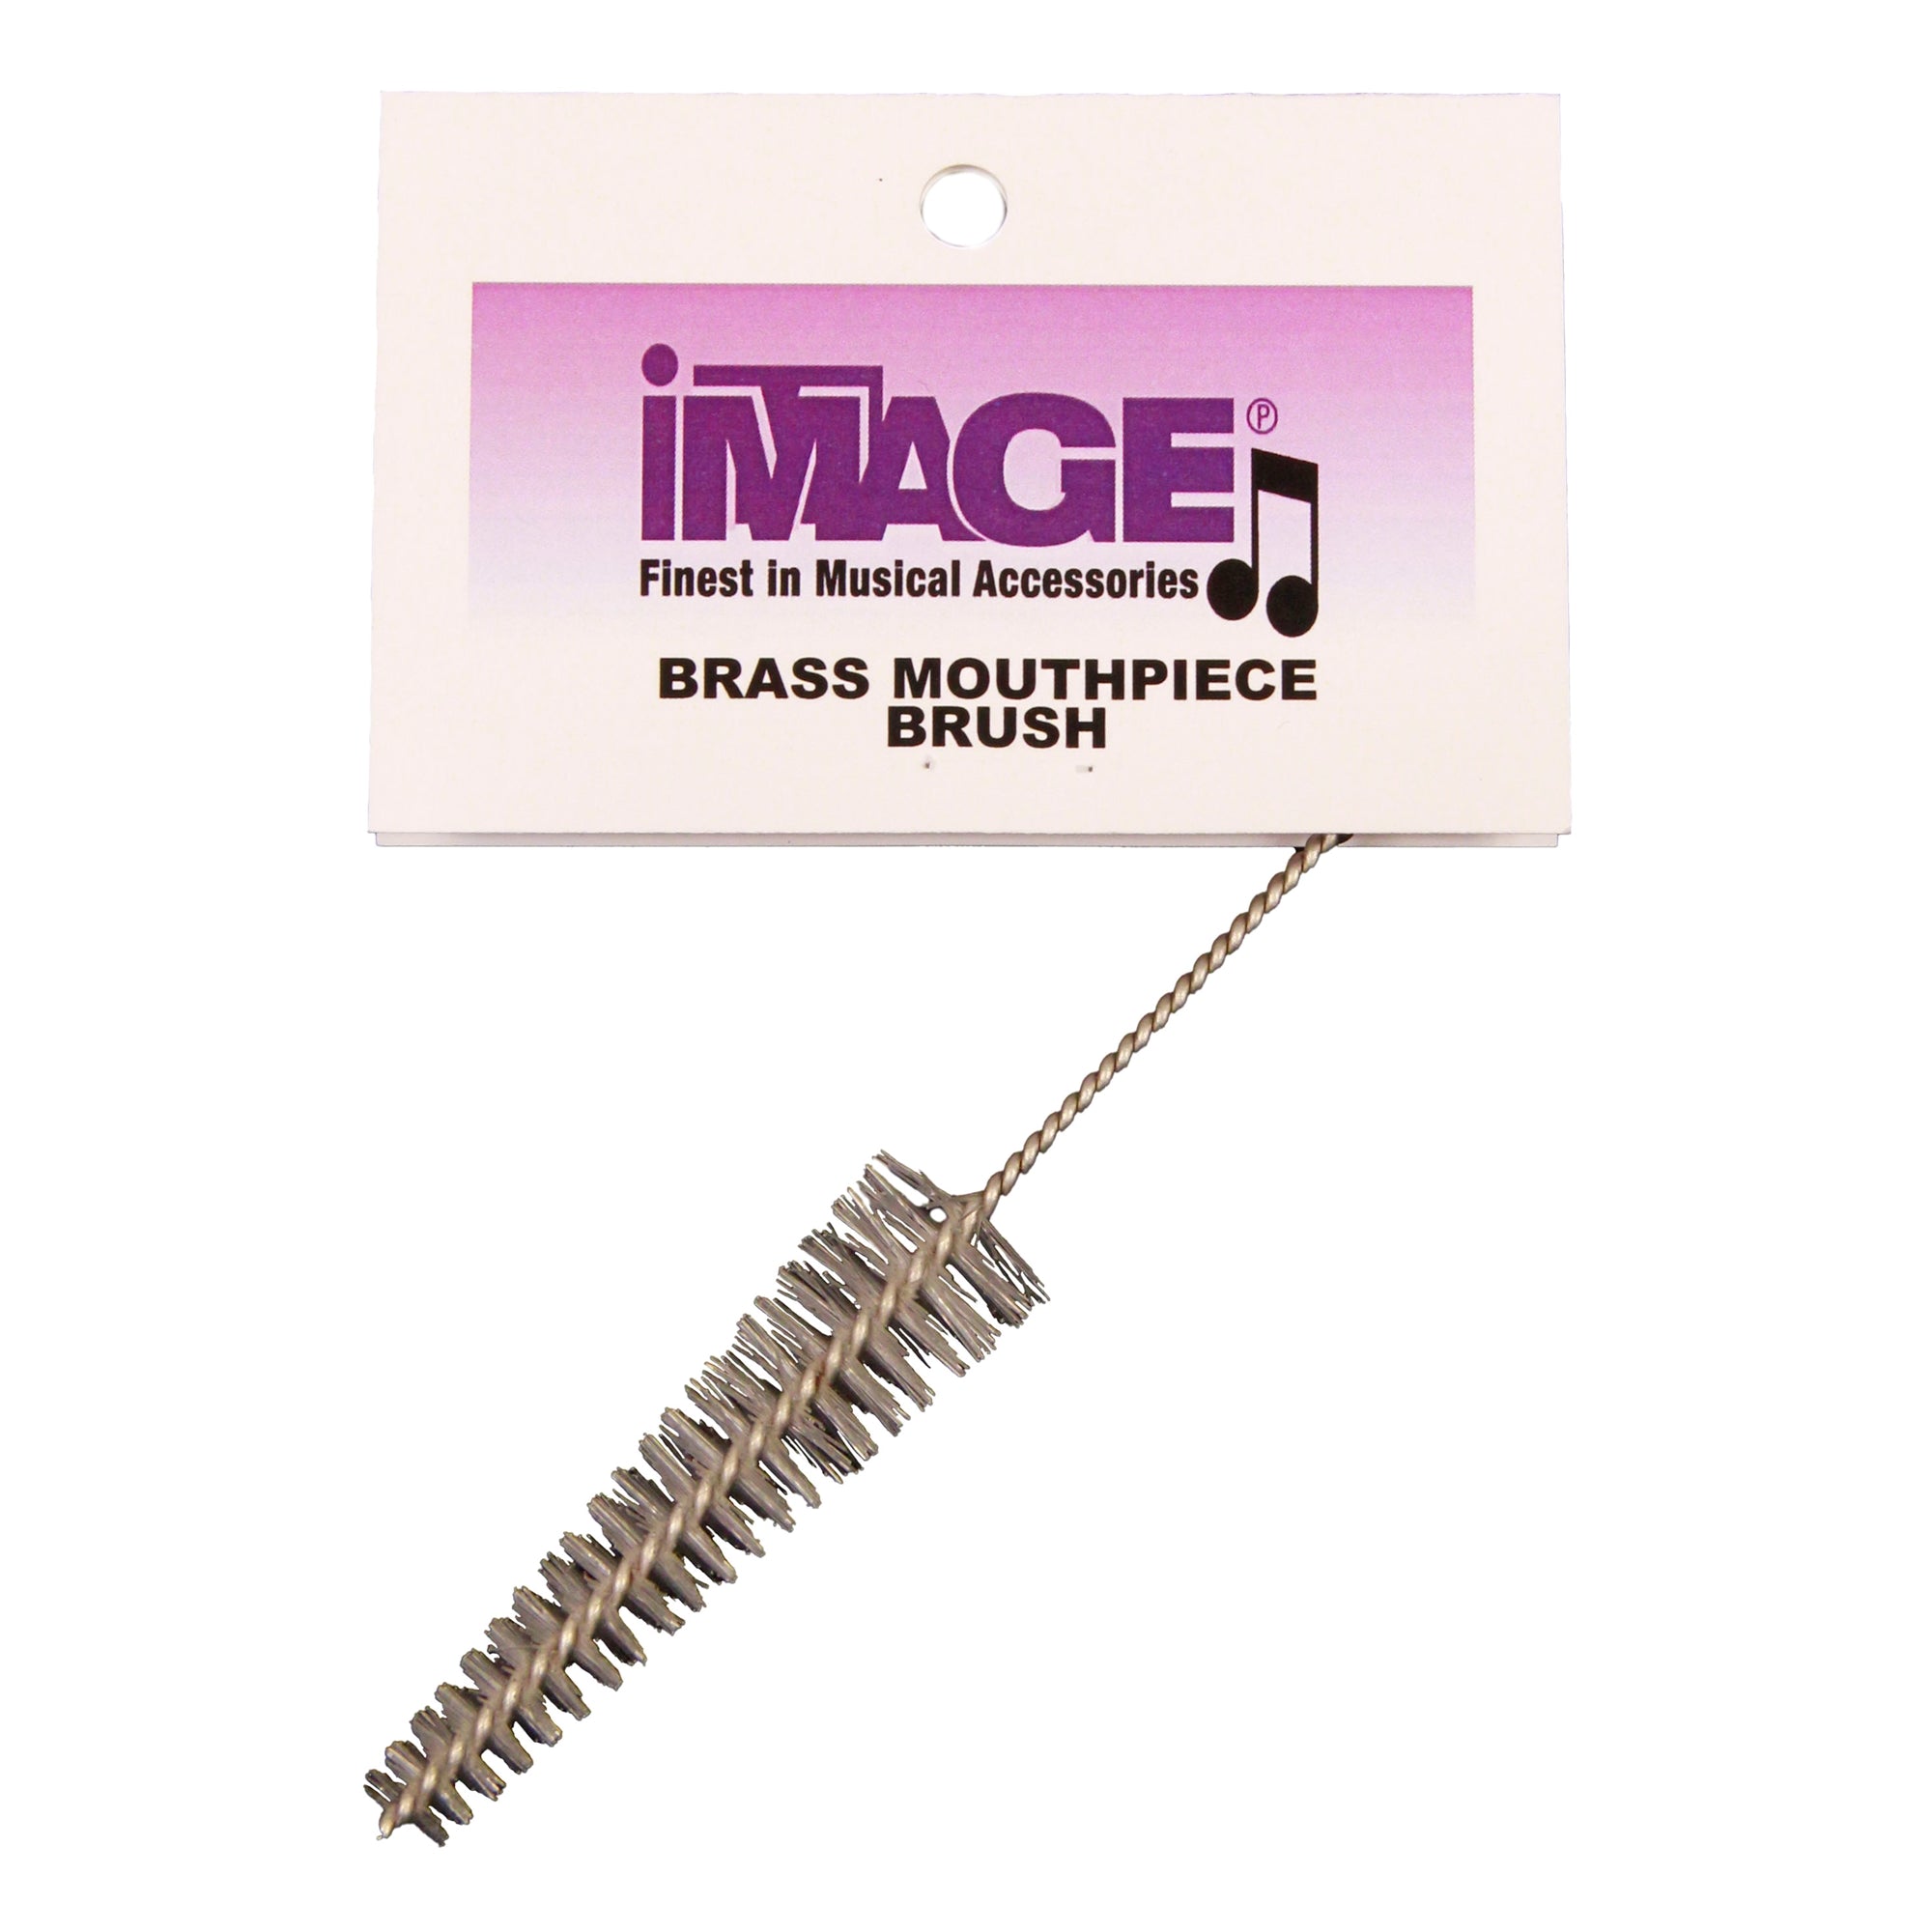 IMAGE HBMB Brass Mouthpiece Brush